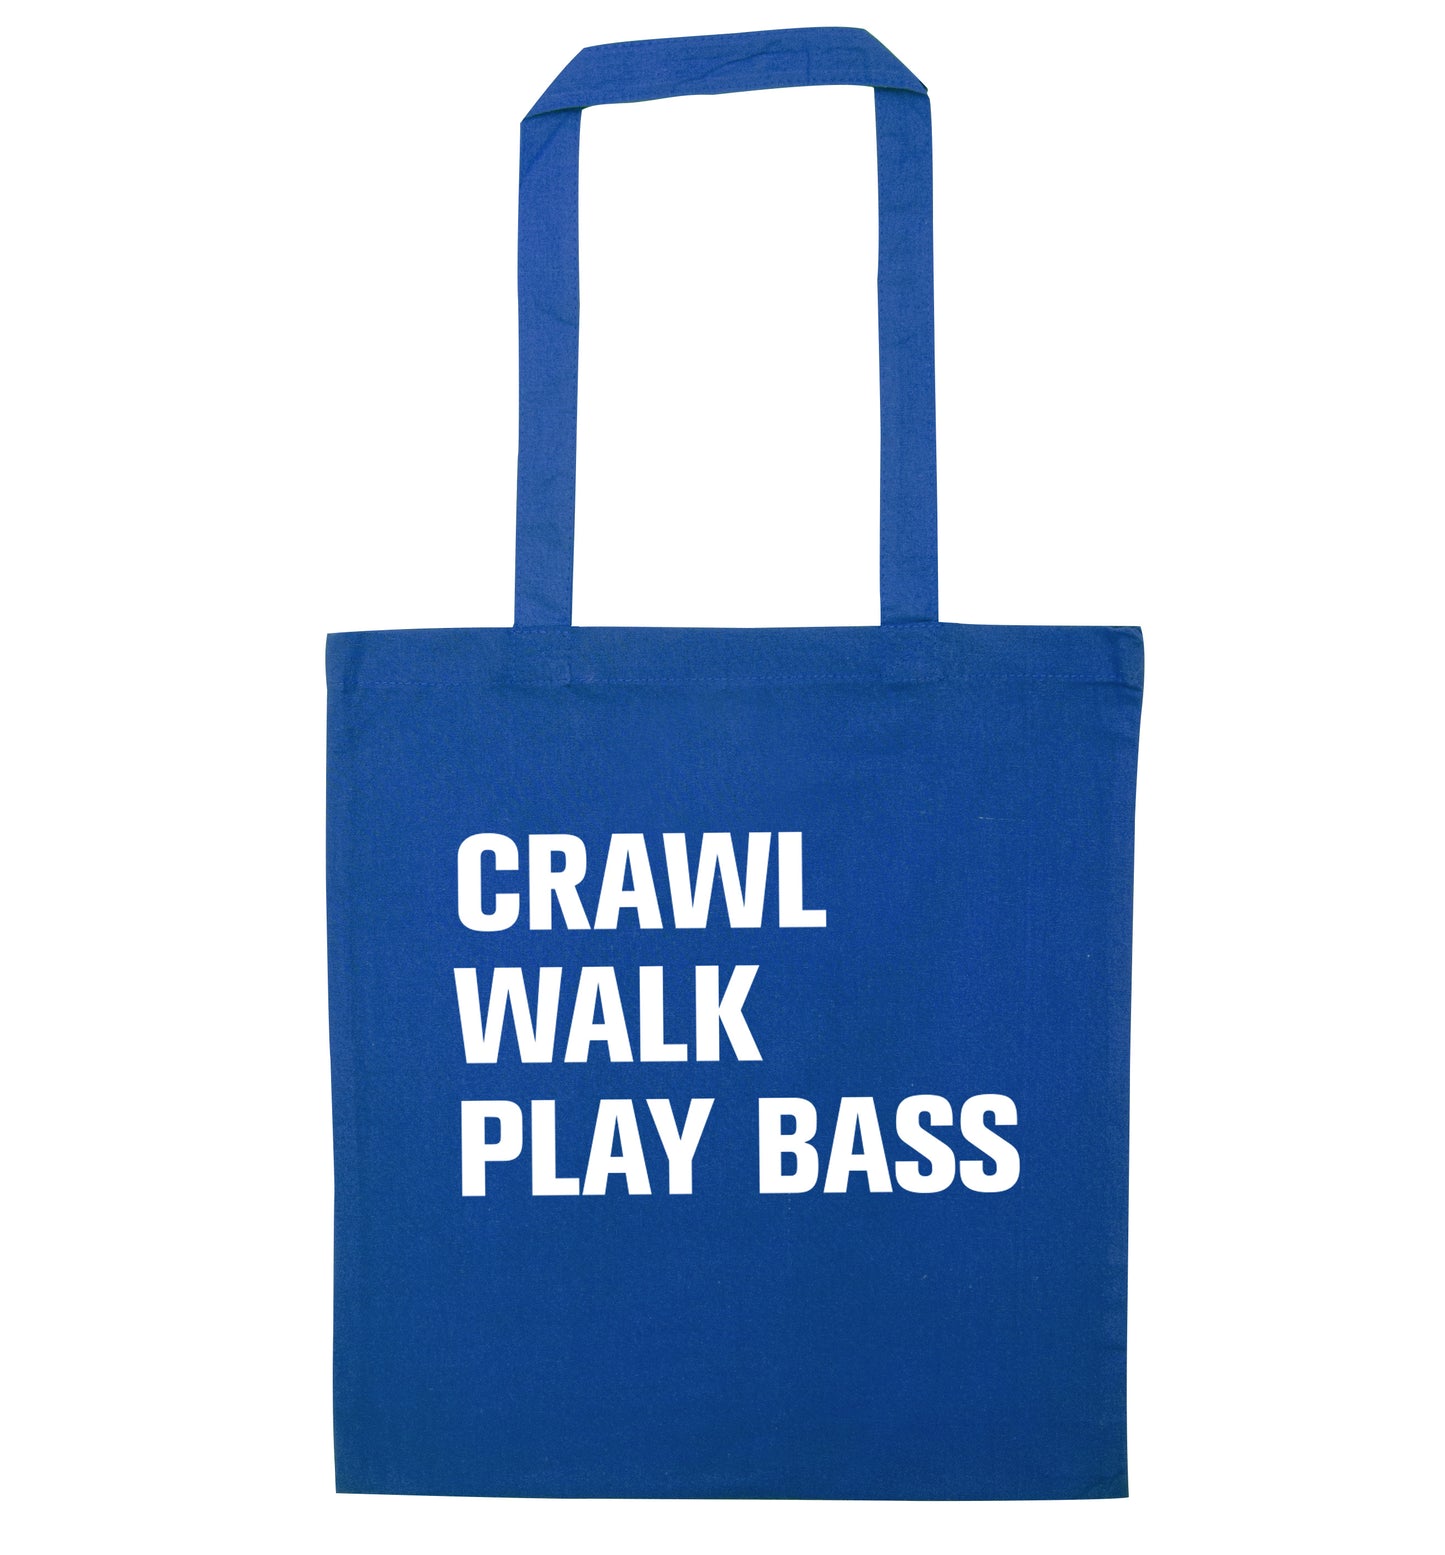 Crawl Walk Play Bass blue tote bag